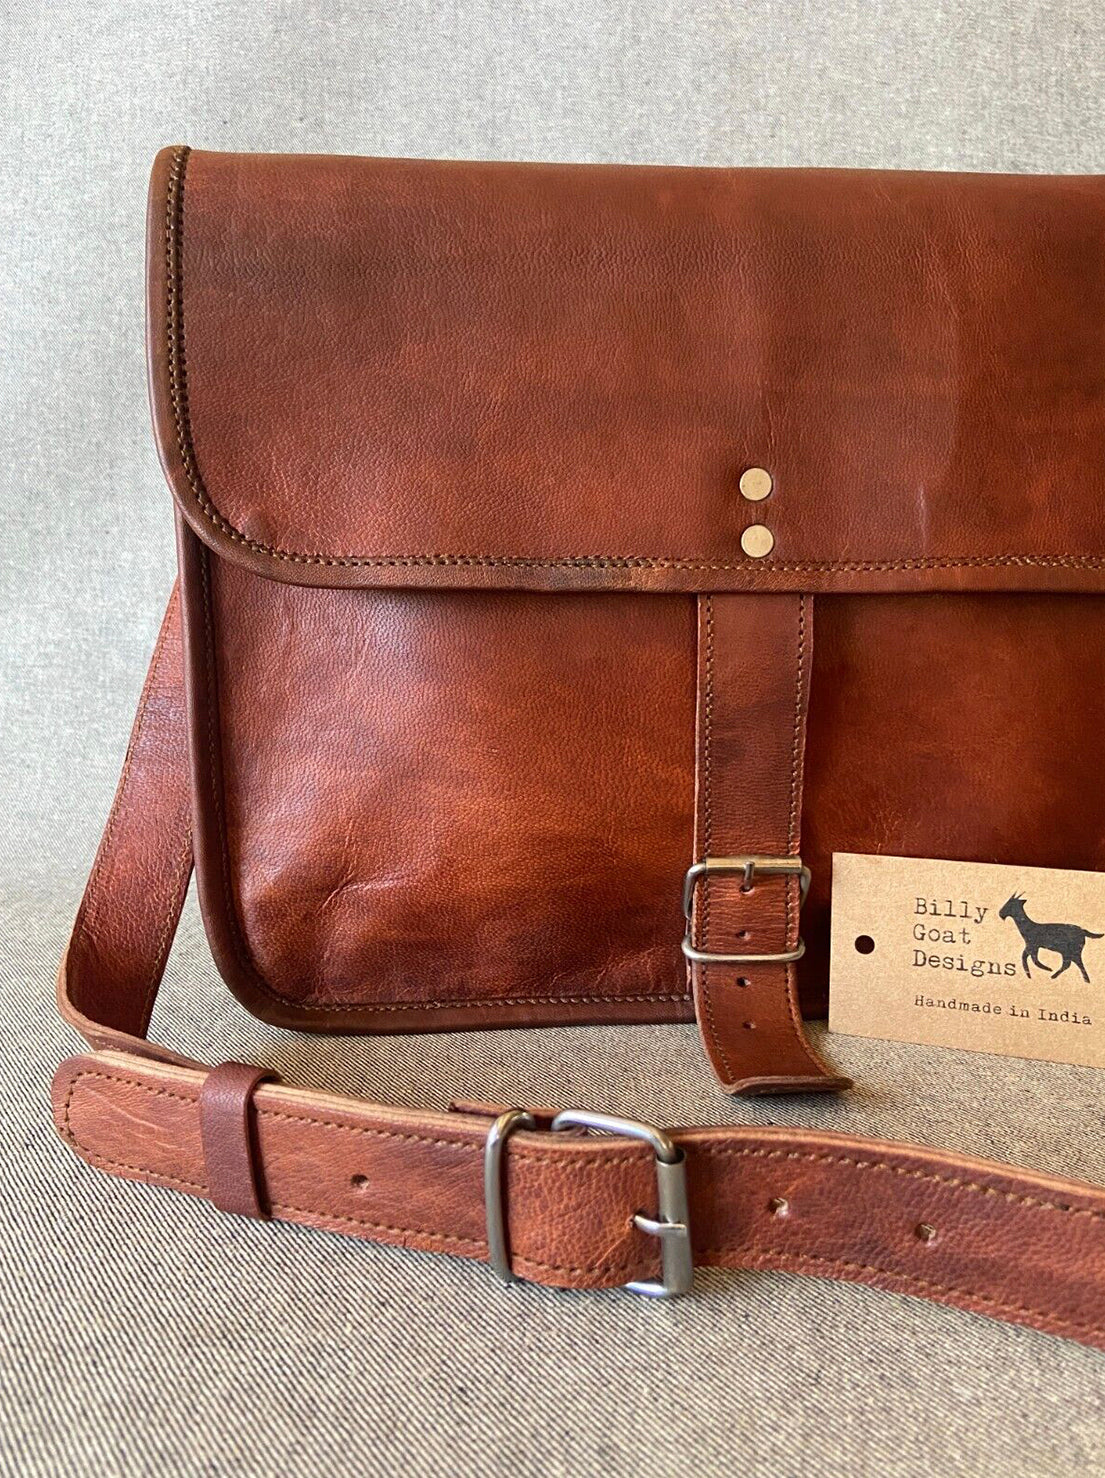 Billy Goat Designs - One Strap Leather Satchel - Medium 13" (S13R)